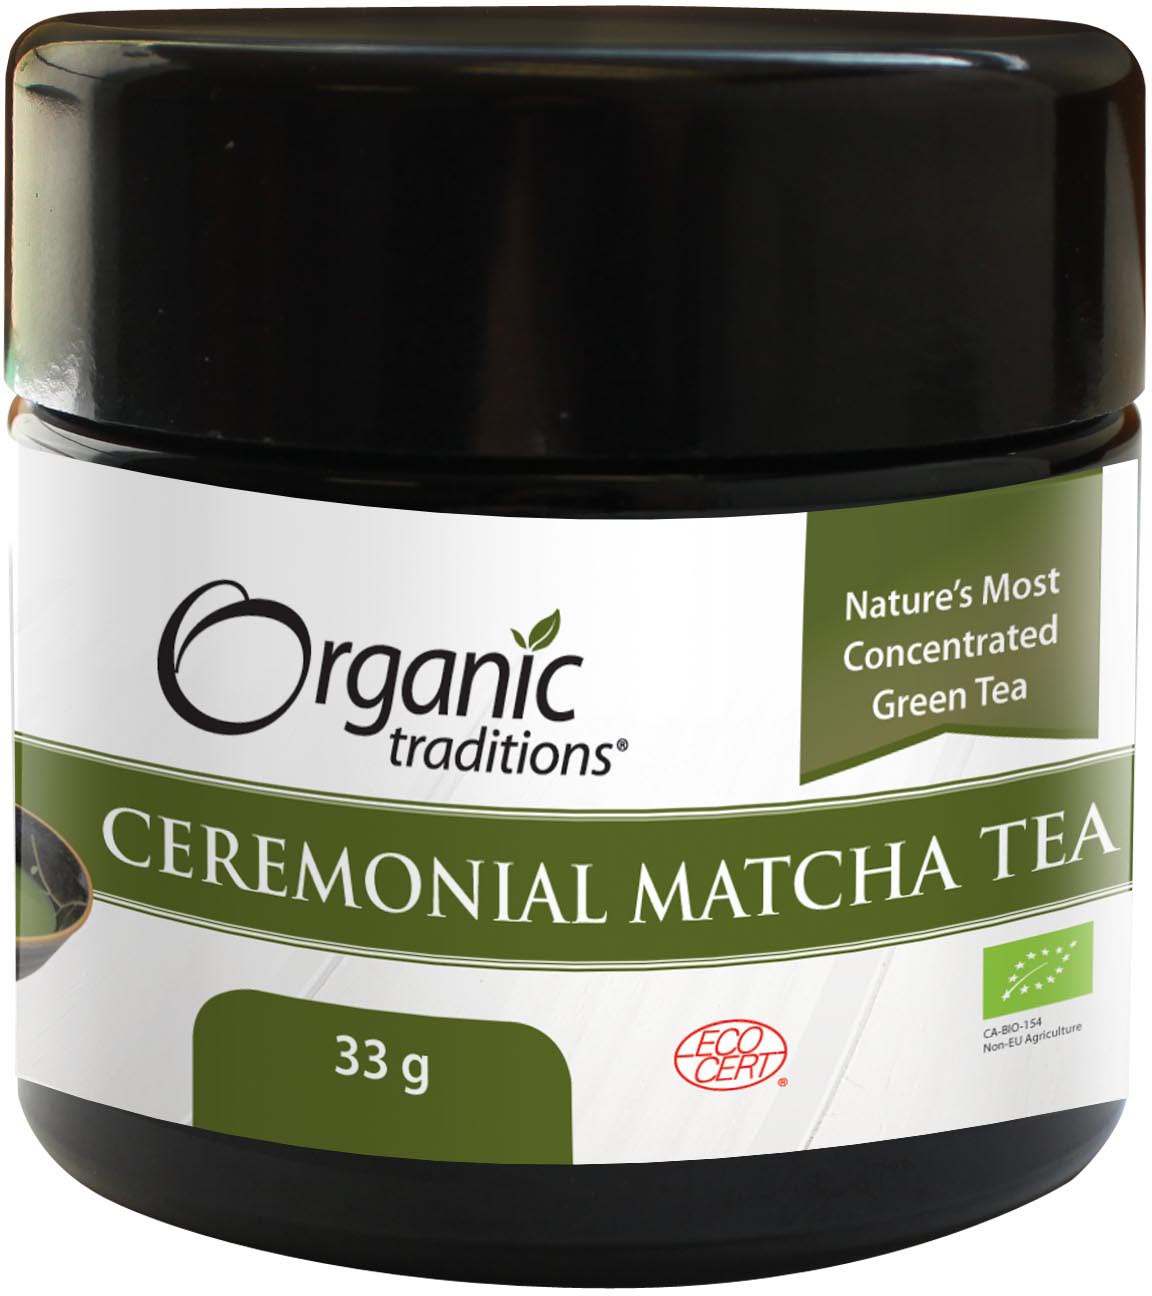 Ceremonial Matcha Tea (33g)